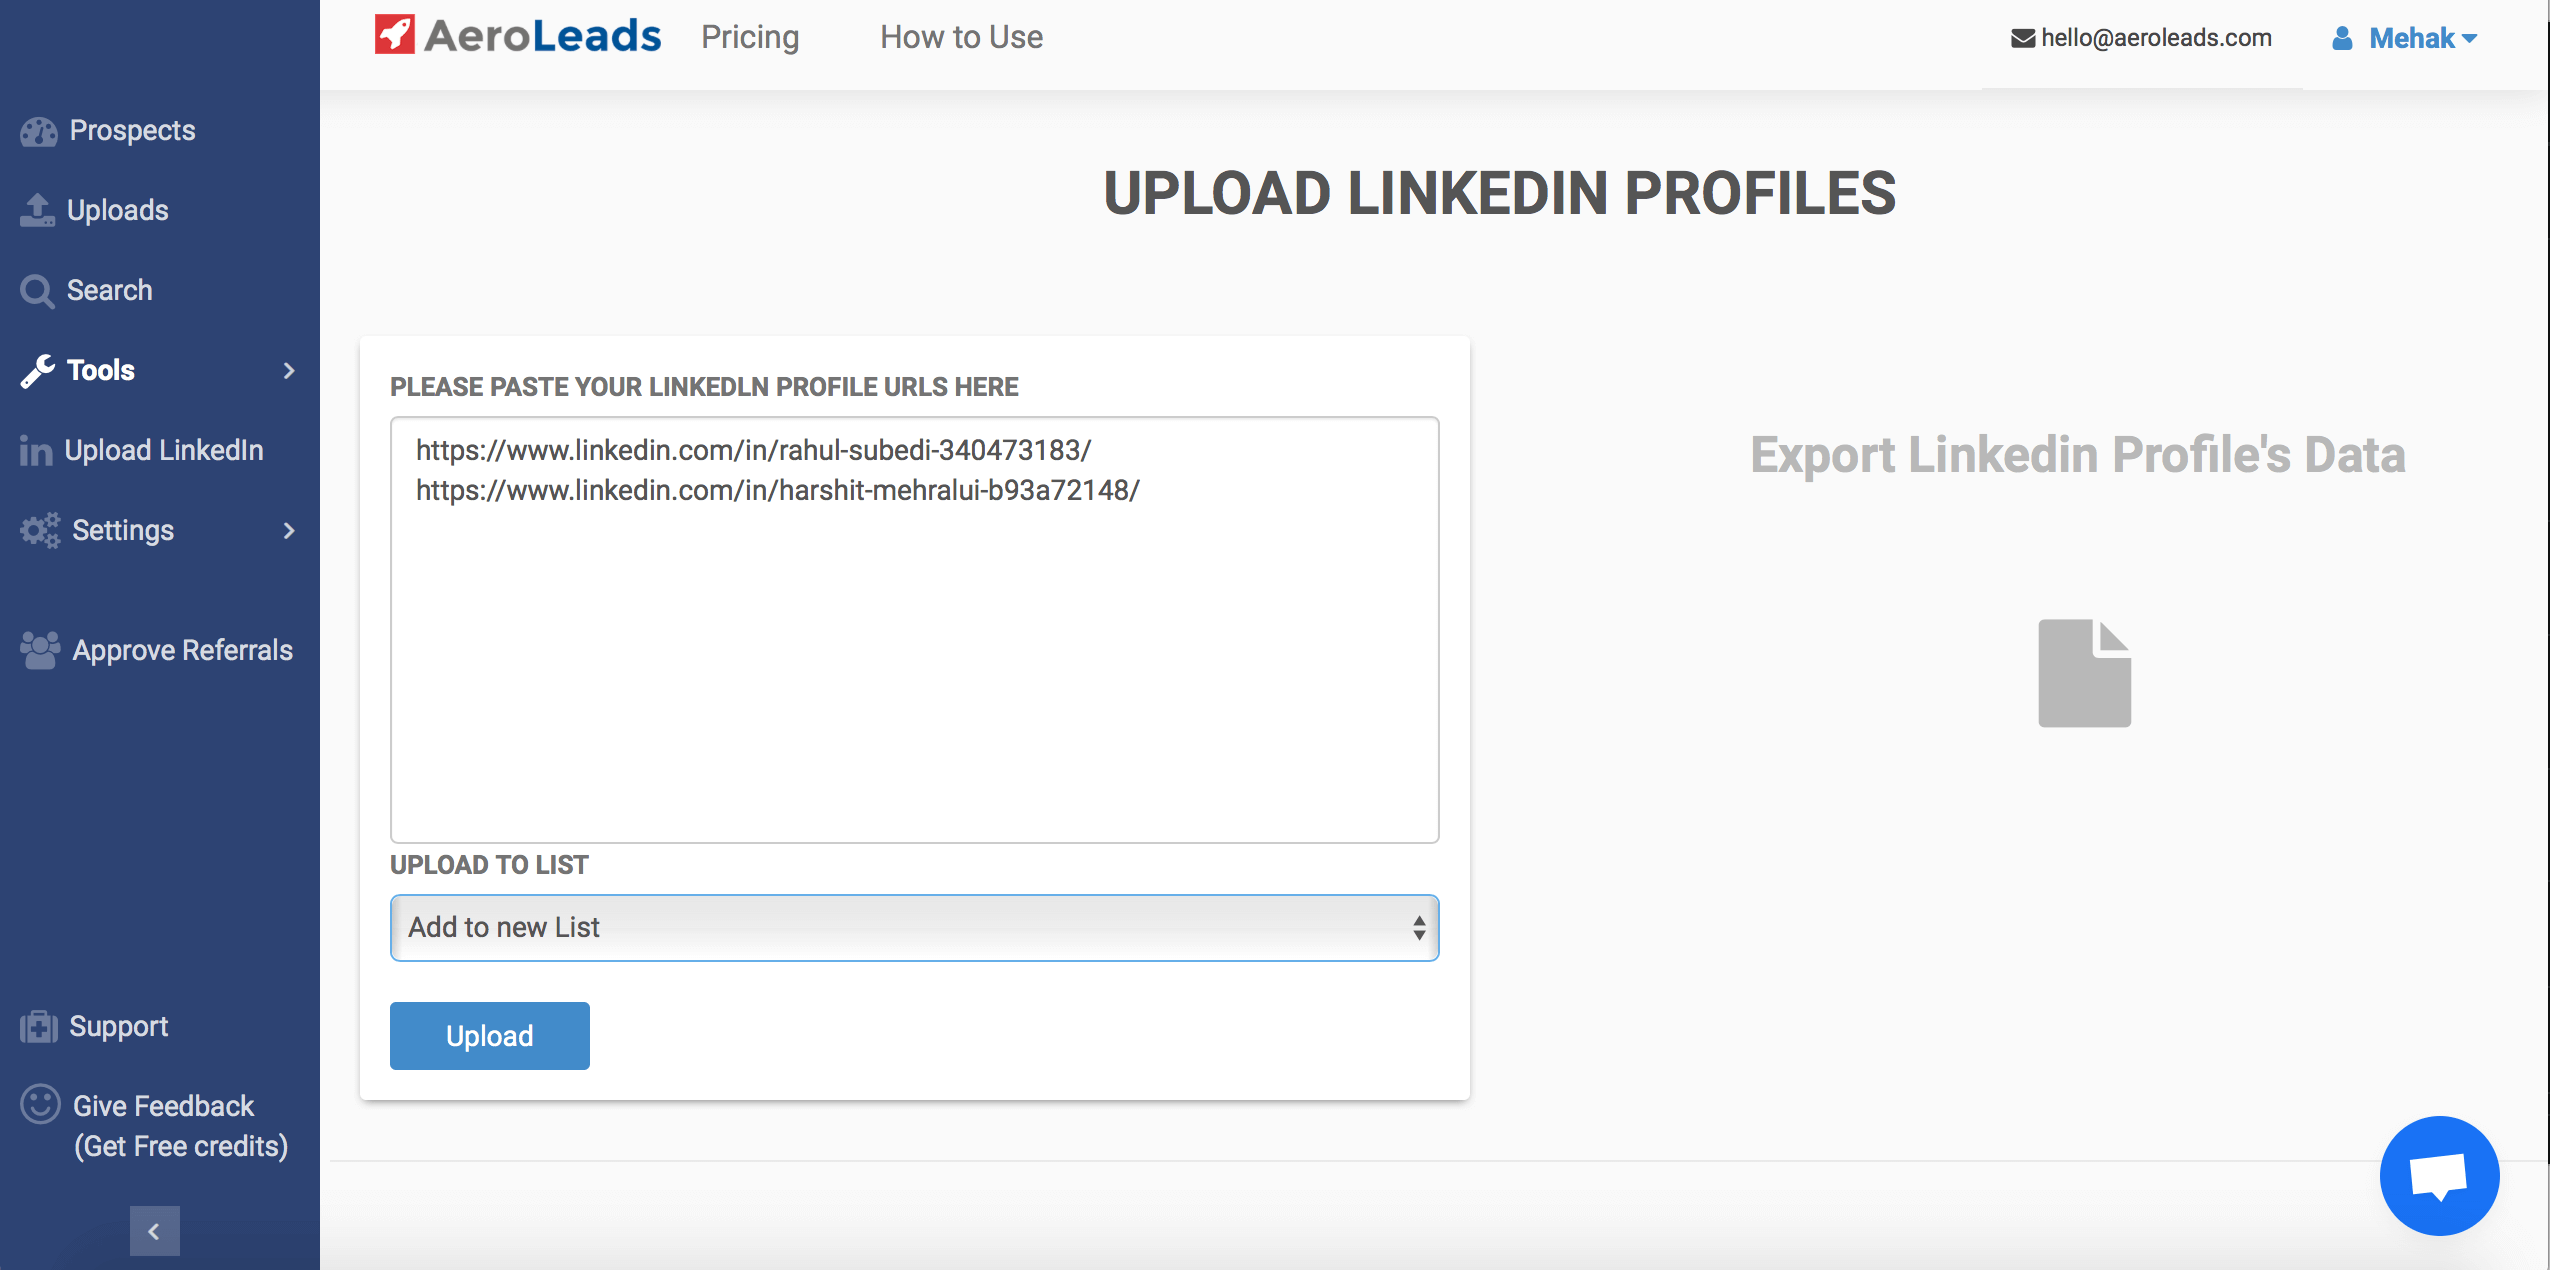 How to use Aeroleads LinkedIn Upload URL?